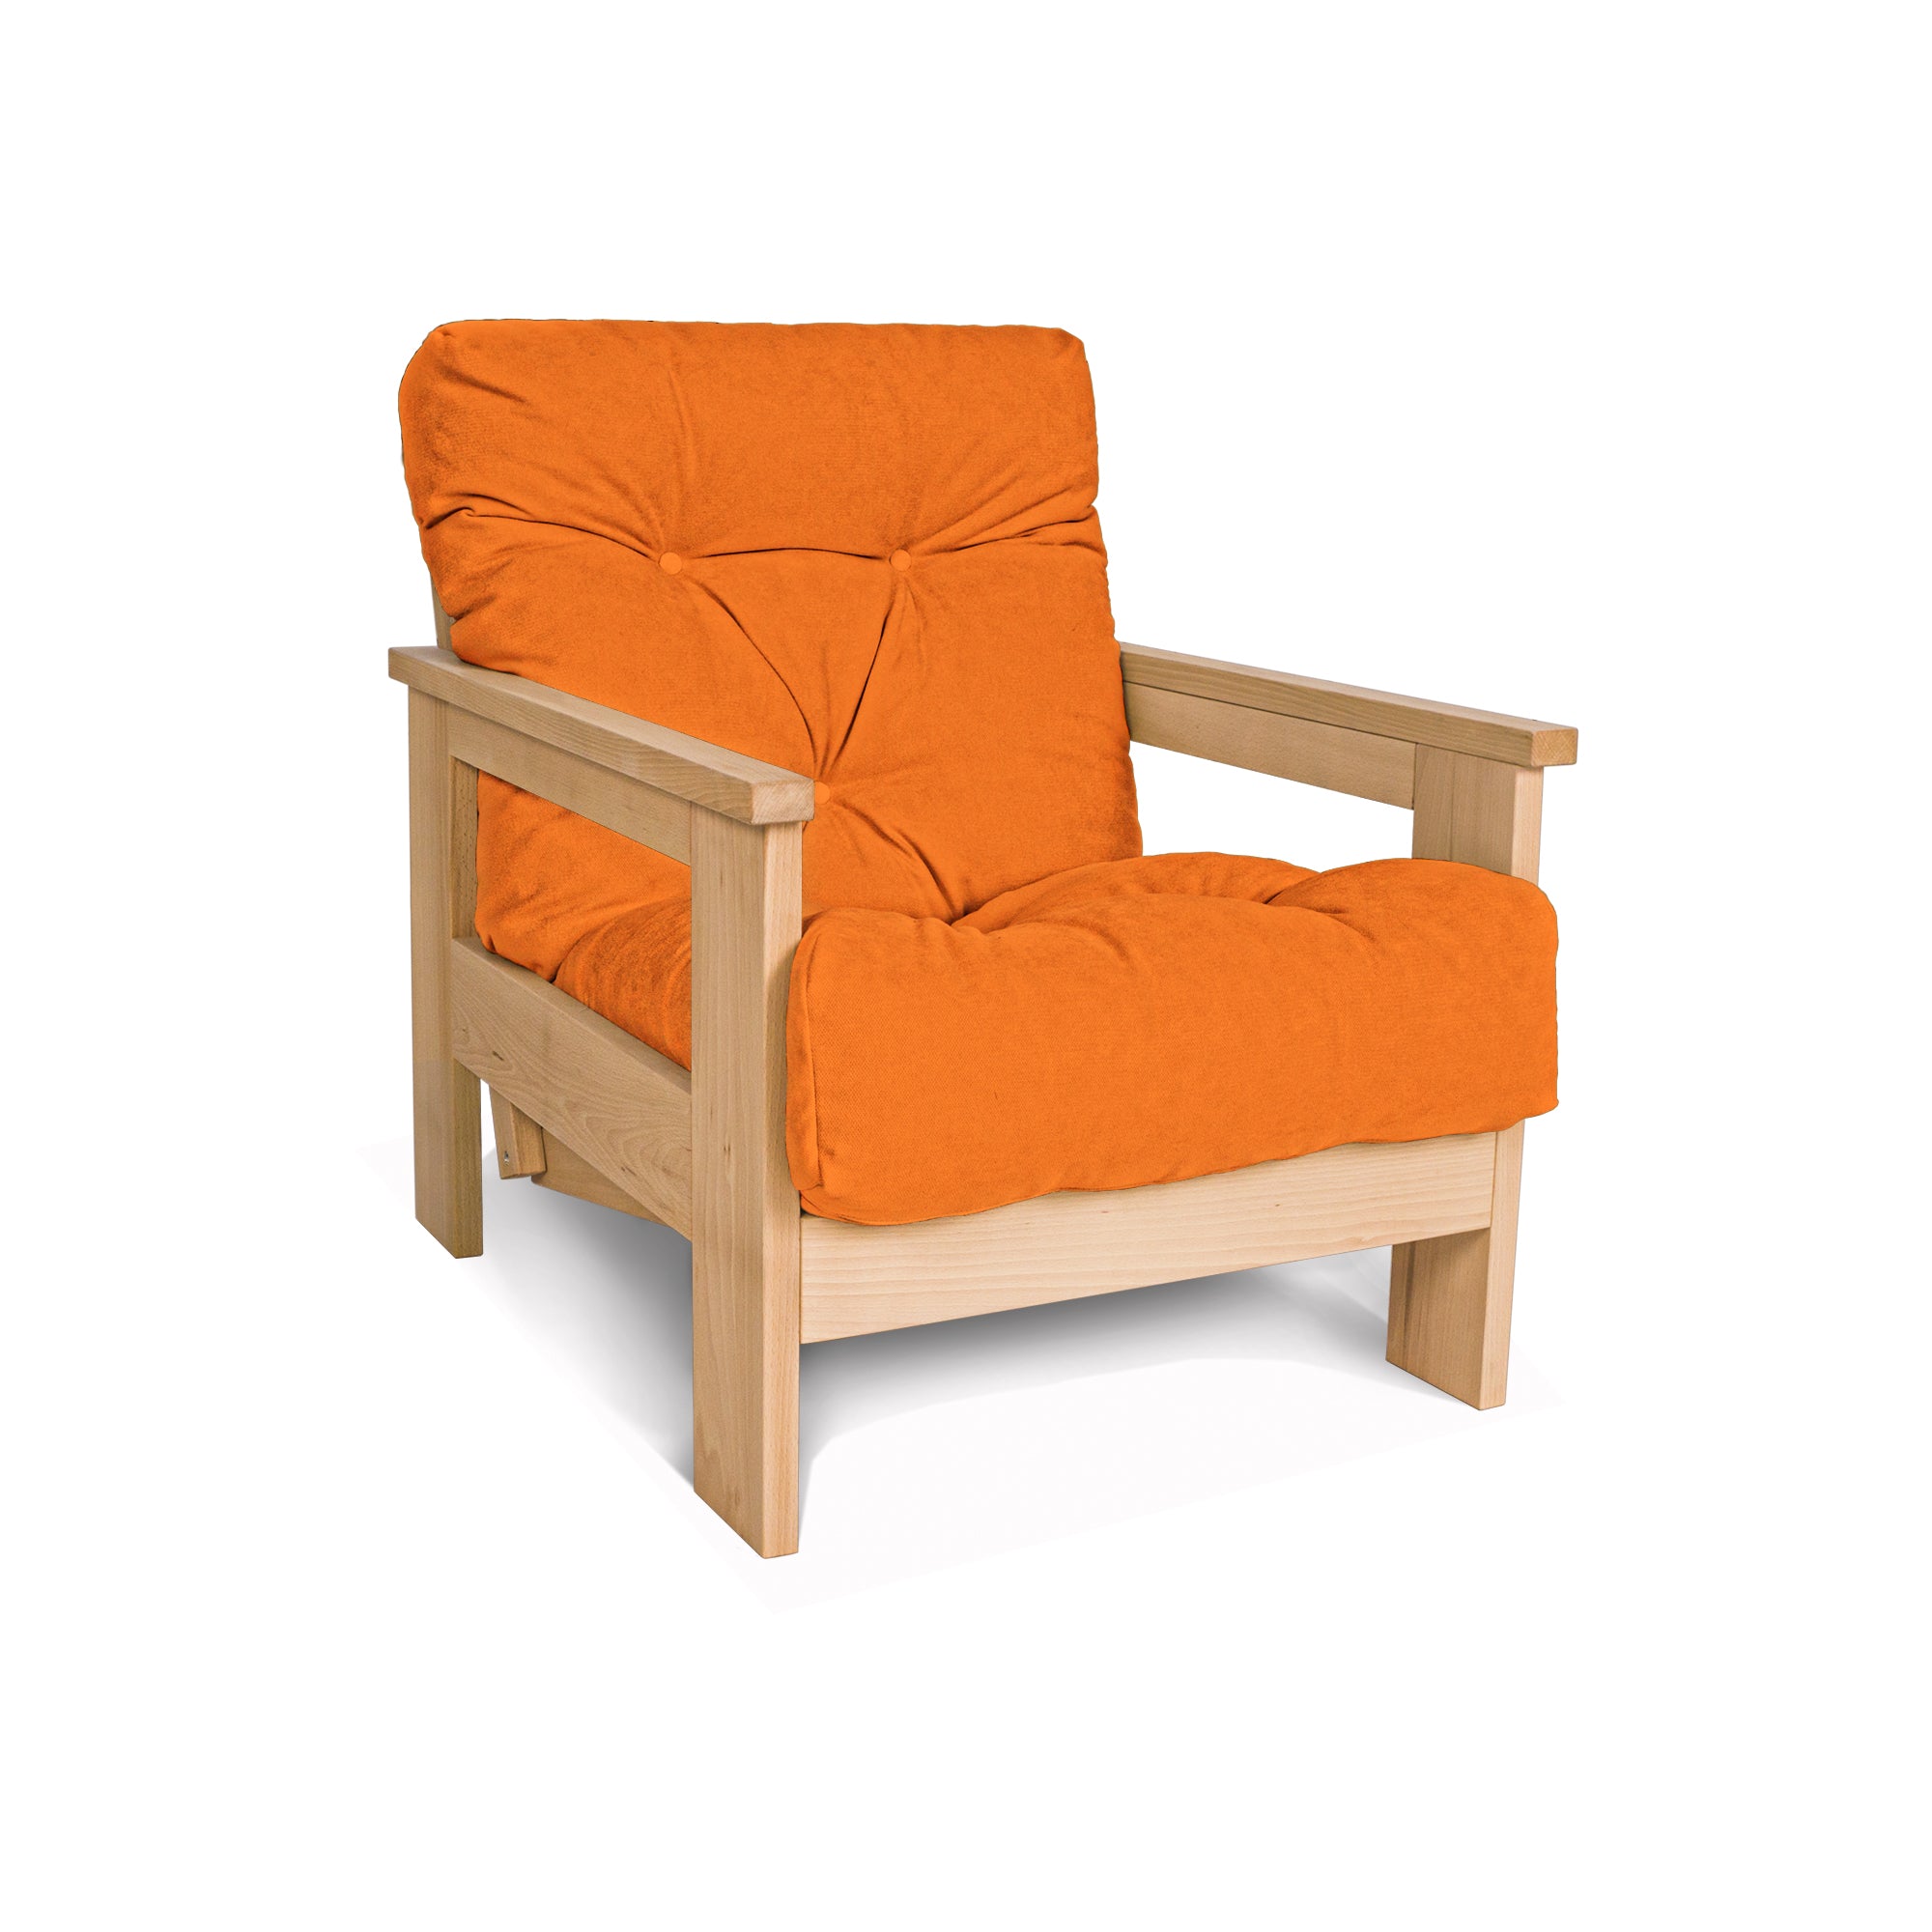 MEXICO Armchair, Beech Wood Frame, Natural Colour-orange fabric